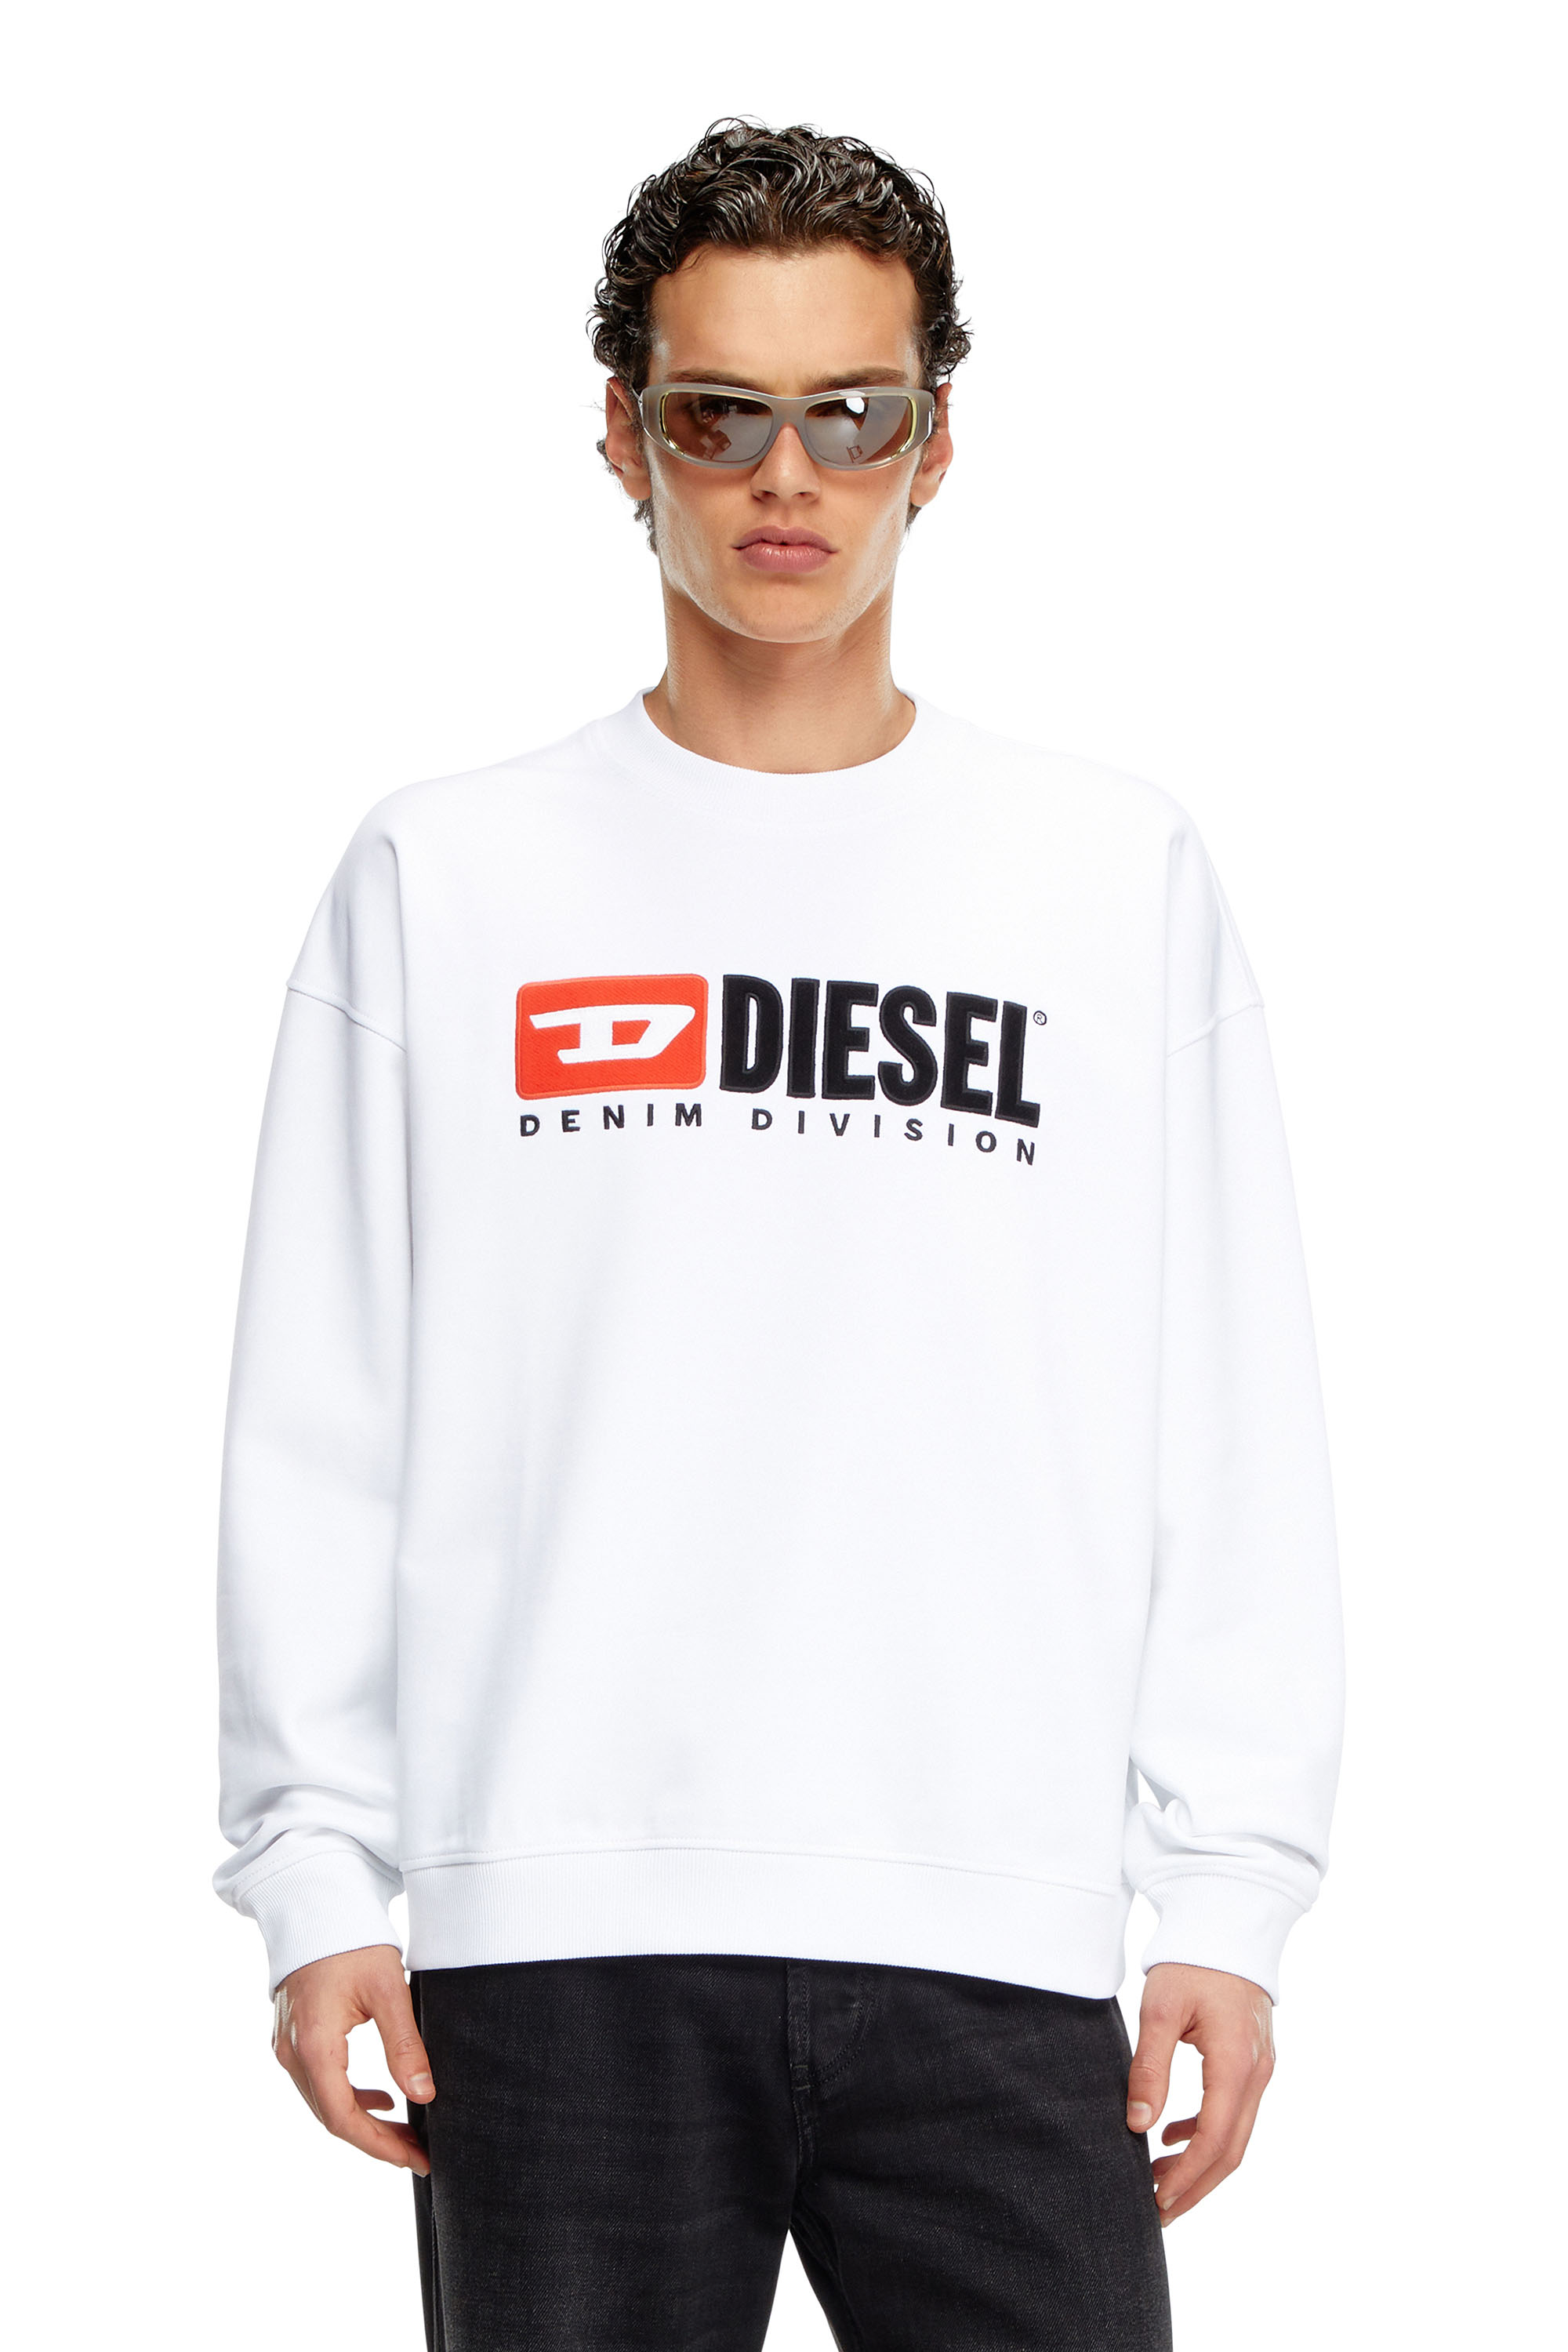 Diesel - S-BOXT-DIV, Man Sweatshirt with Denim Division logo in White - Image 1